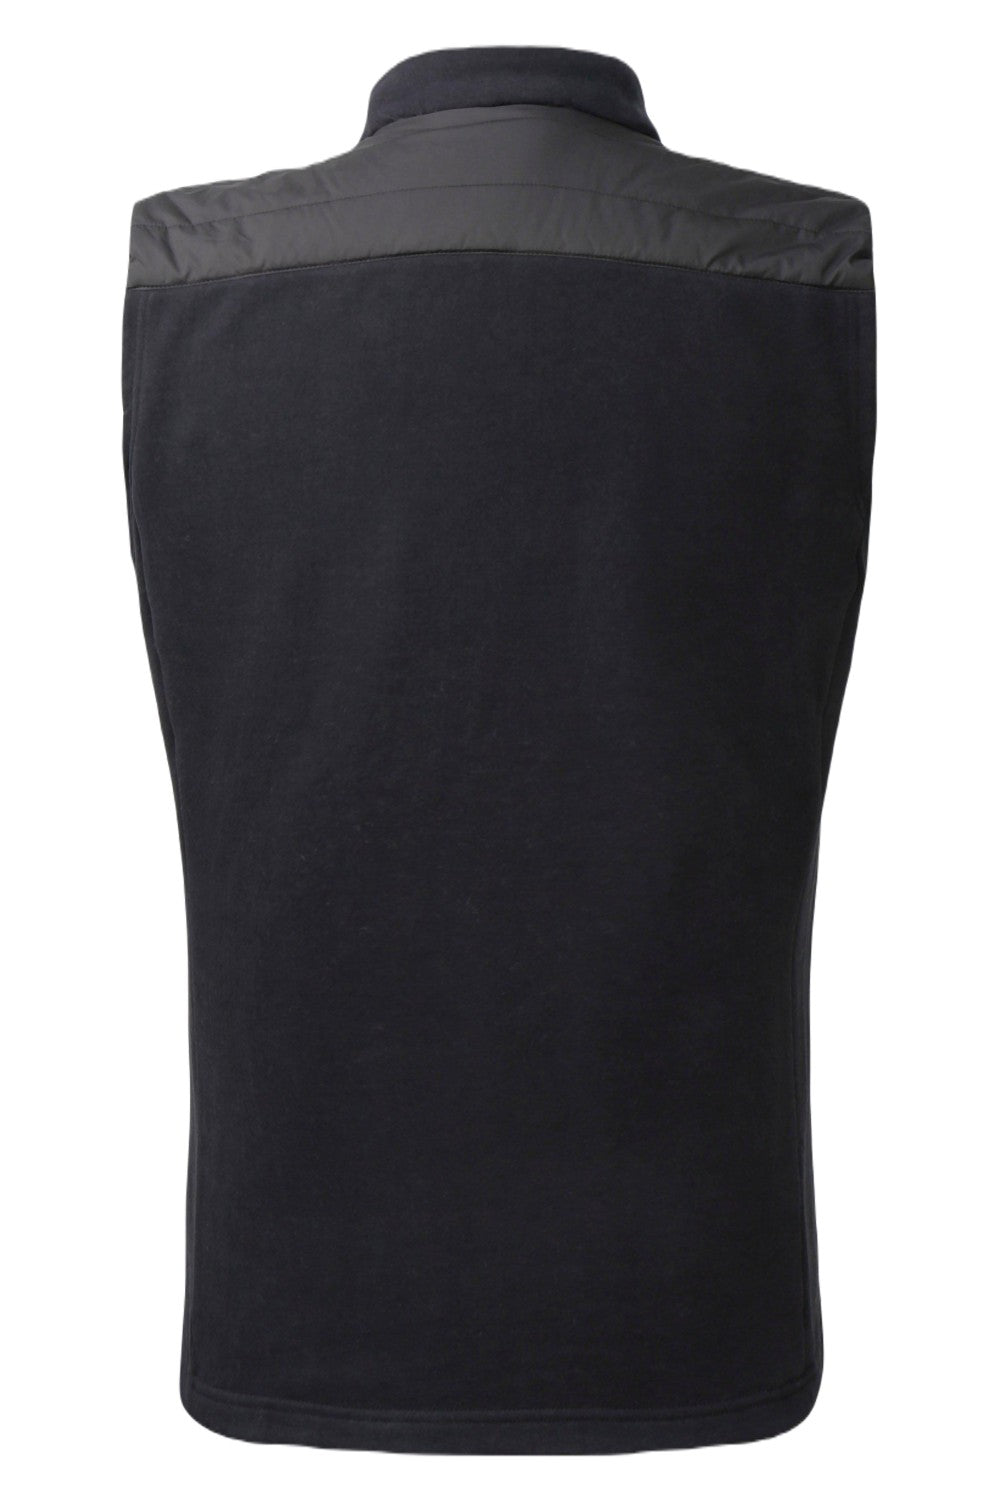 Didriksons Ubbe Unisex Vest 3 in Black 